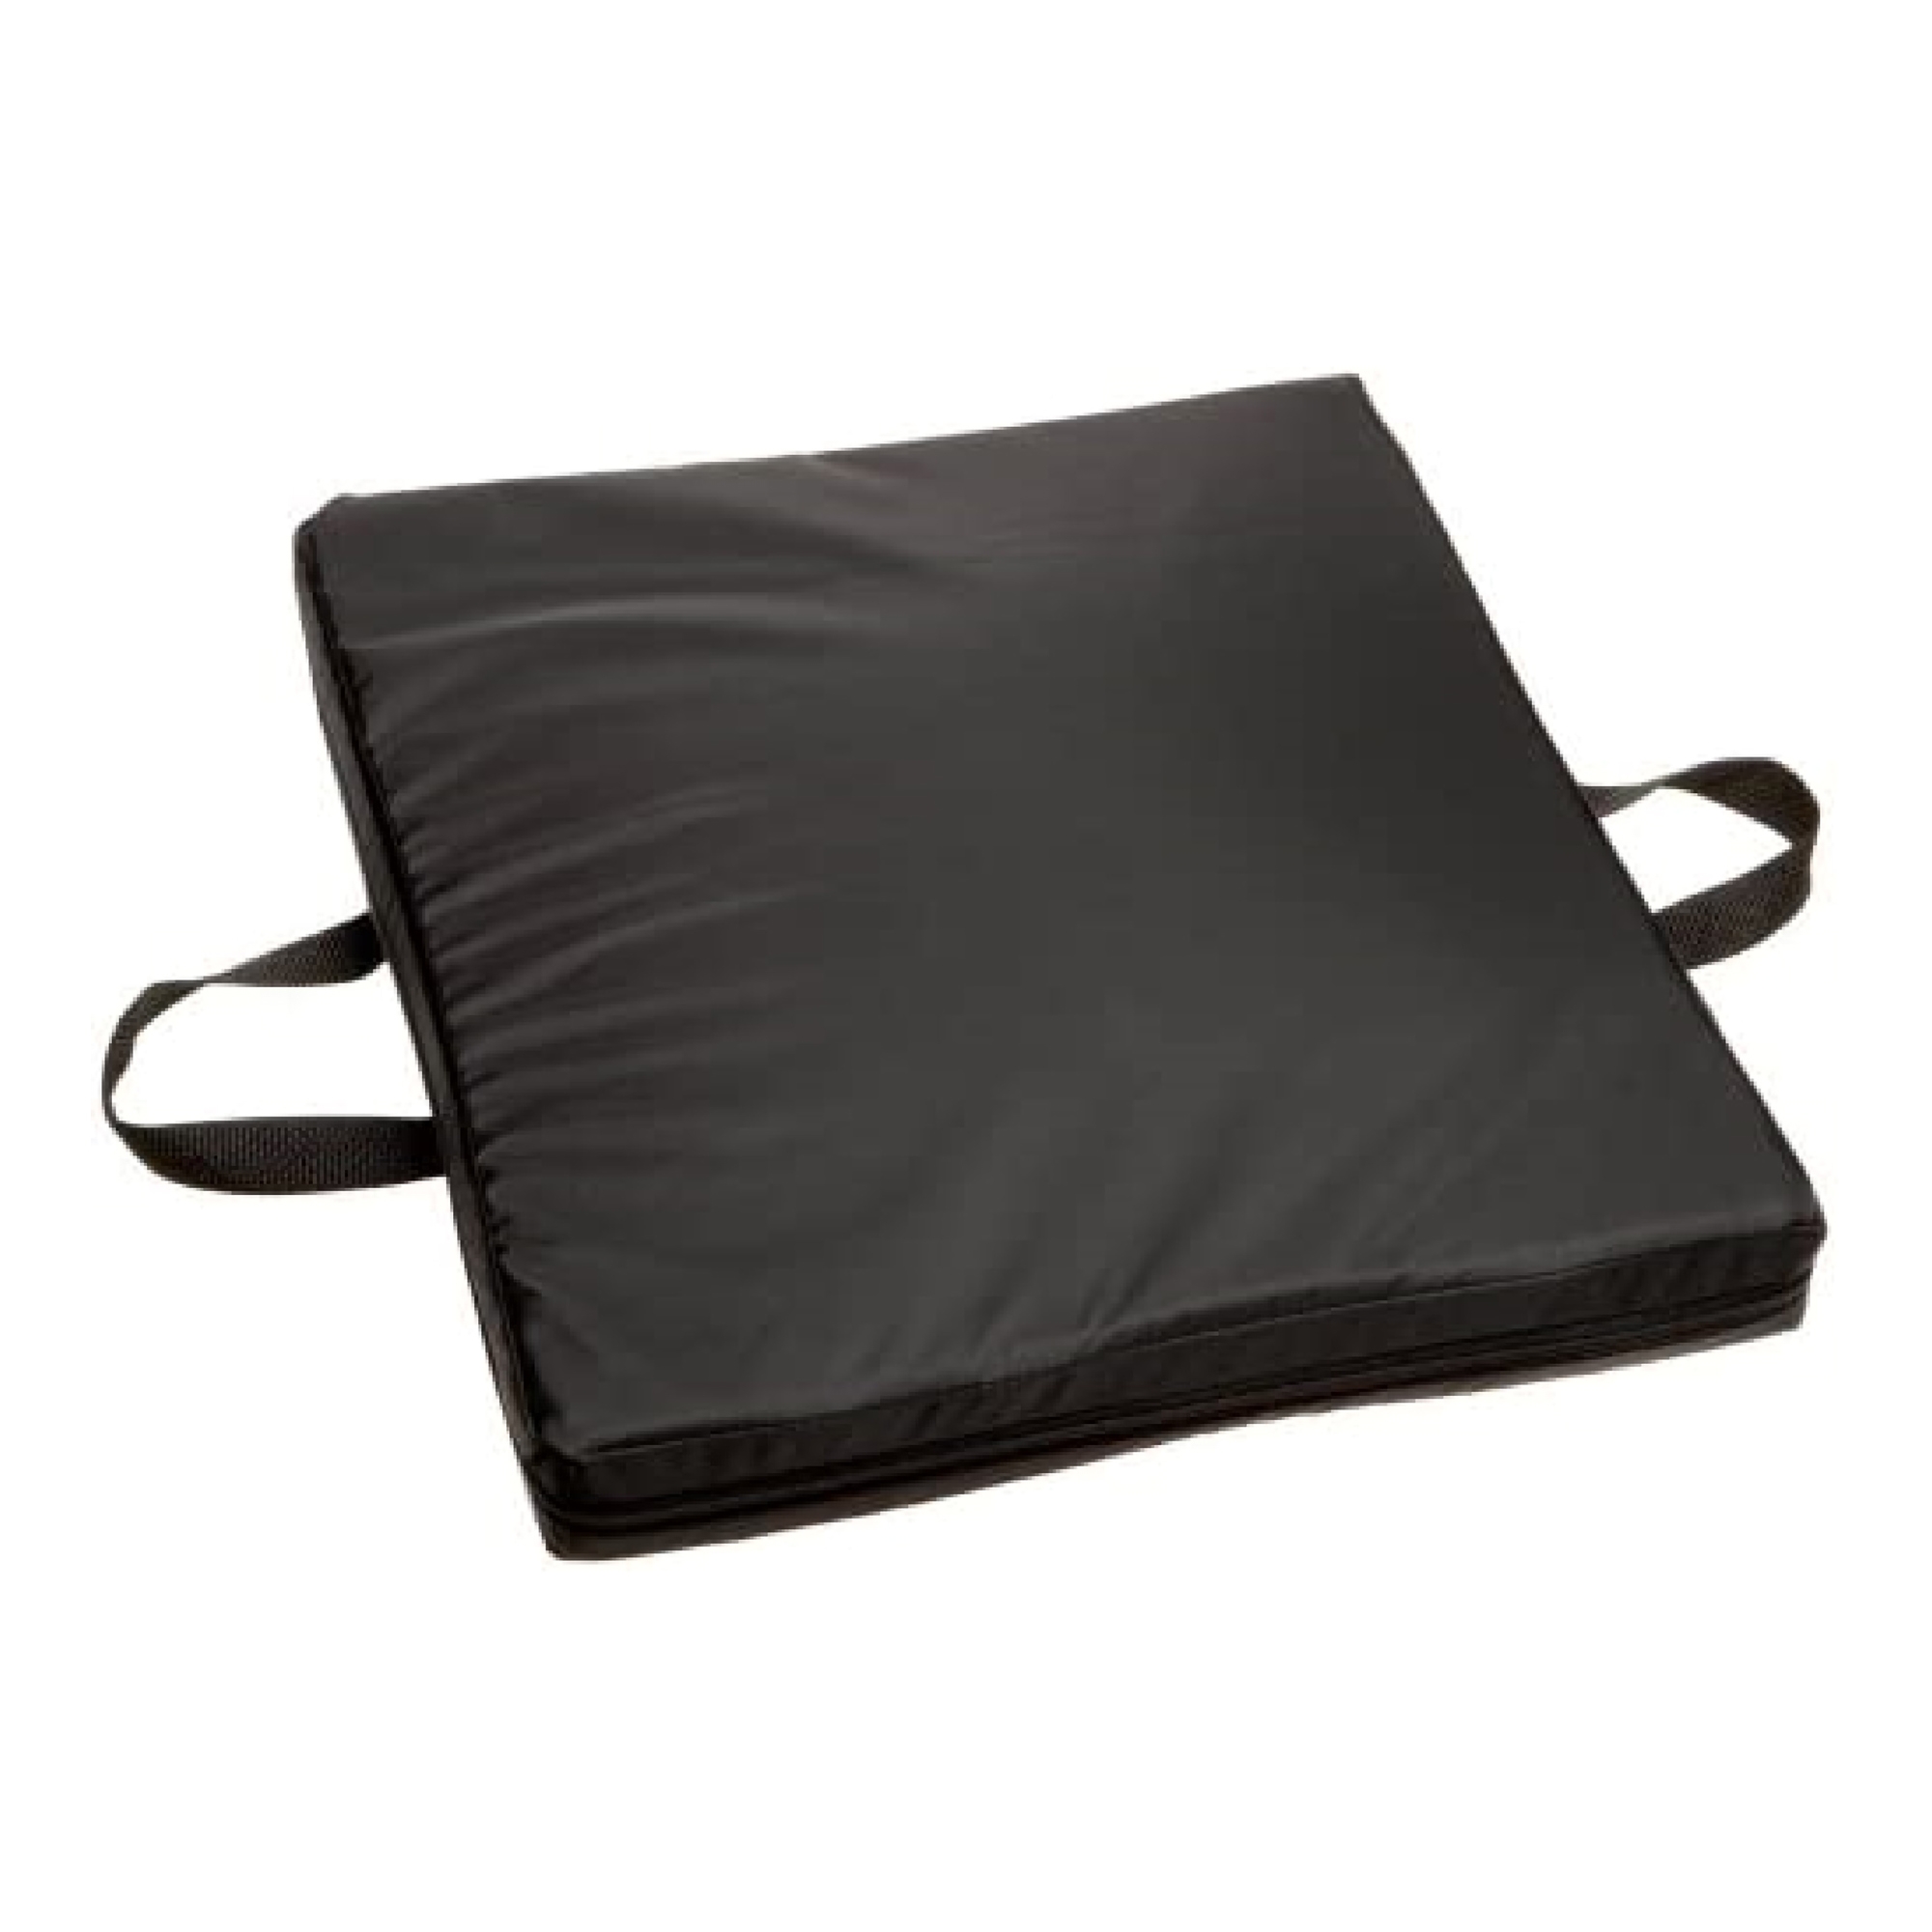 DMI Seat Cushion Black Foam / Gel Mobility Accessories 513-7645-0200 - 1 Ct - image 4 of 5